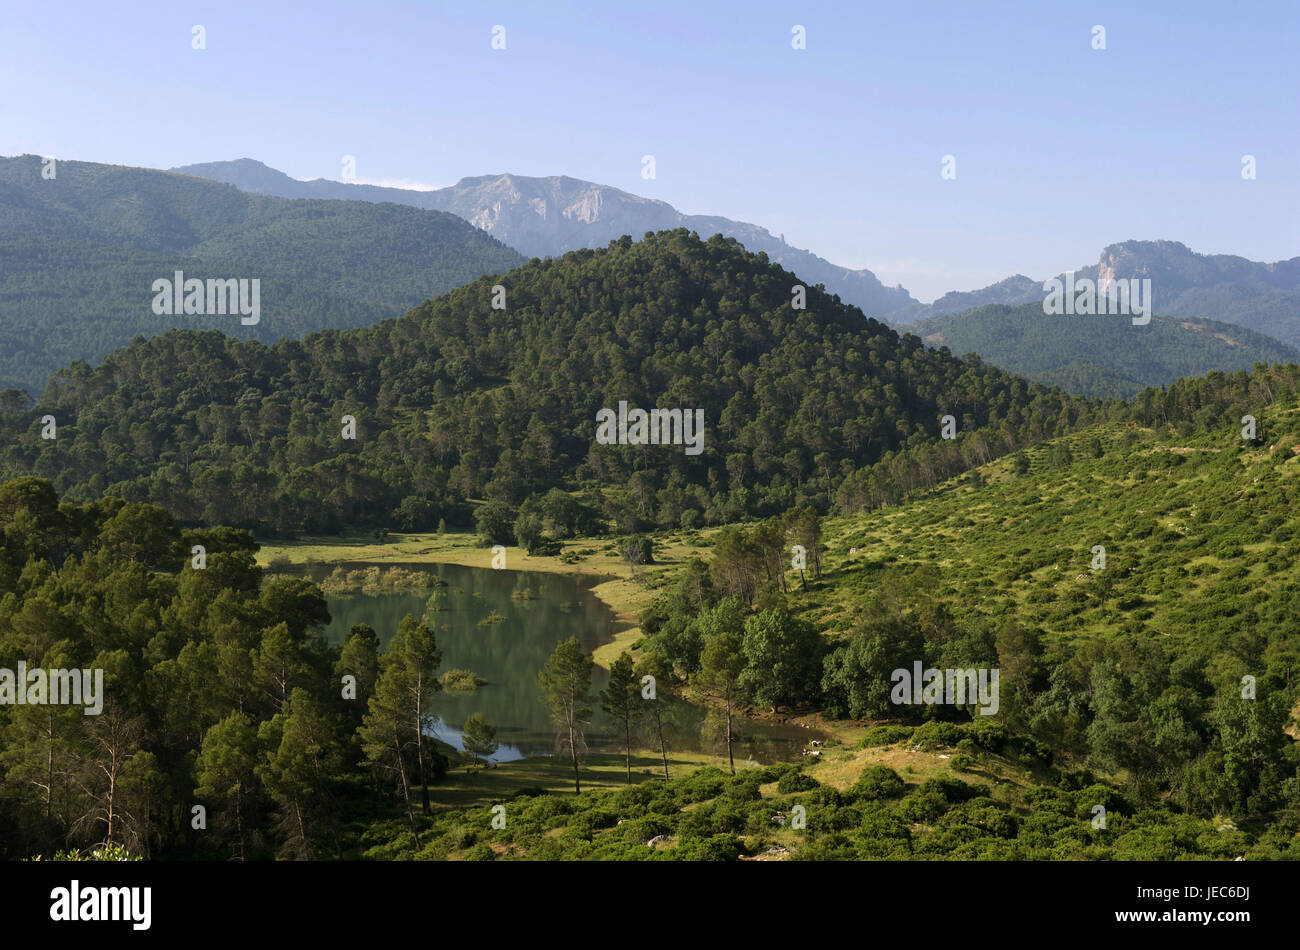 Spain, Andalusia, Sierra de Cazorla, Tranco de Beas, reservoir and wood, Stock Photo